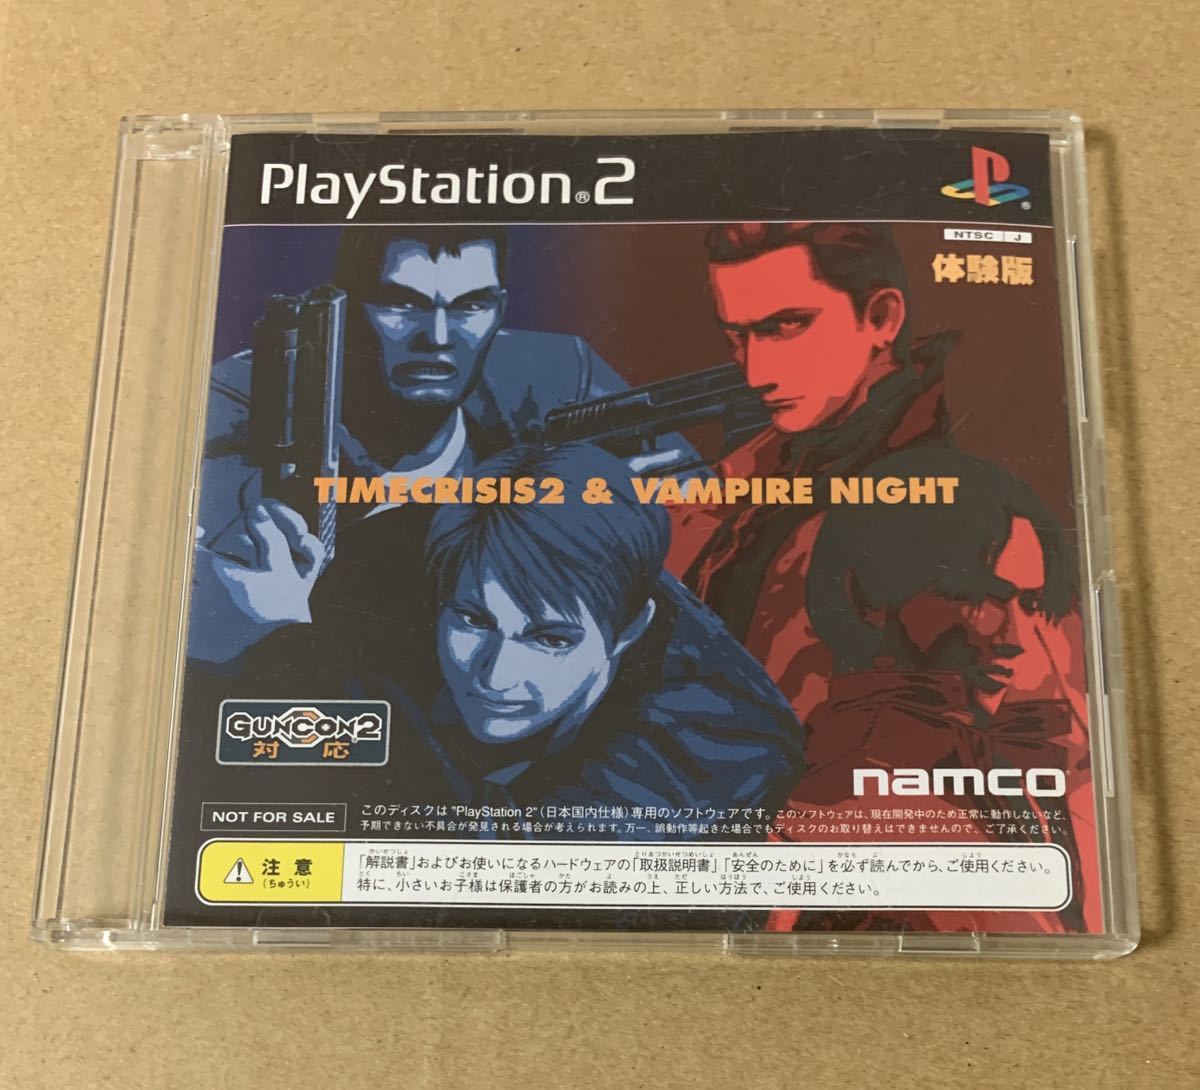 PS2 TIMECRISIS 2 & VAMPIRE NIGHT 体験版 非売品 デモ demo not for sale SLPM 61013 タイムクライシス ヴァンパイアナイト PlayStation